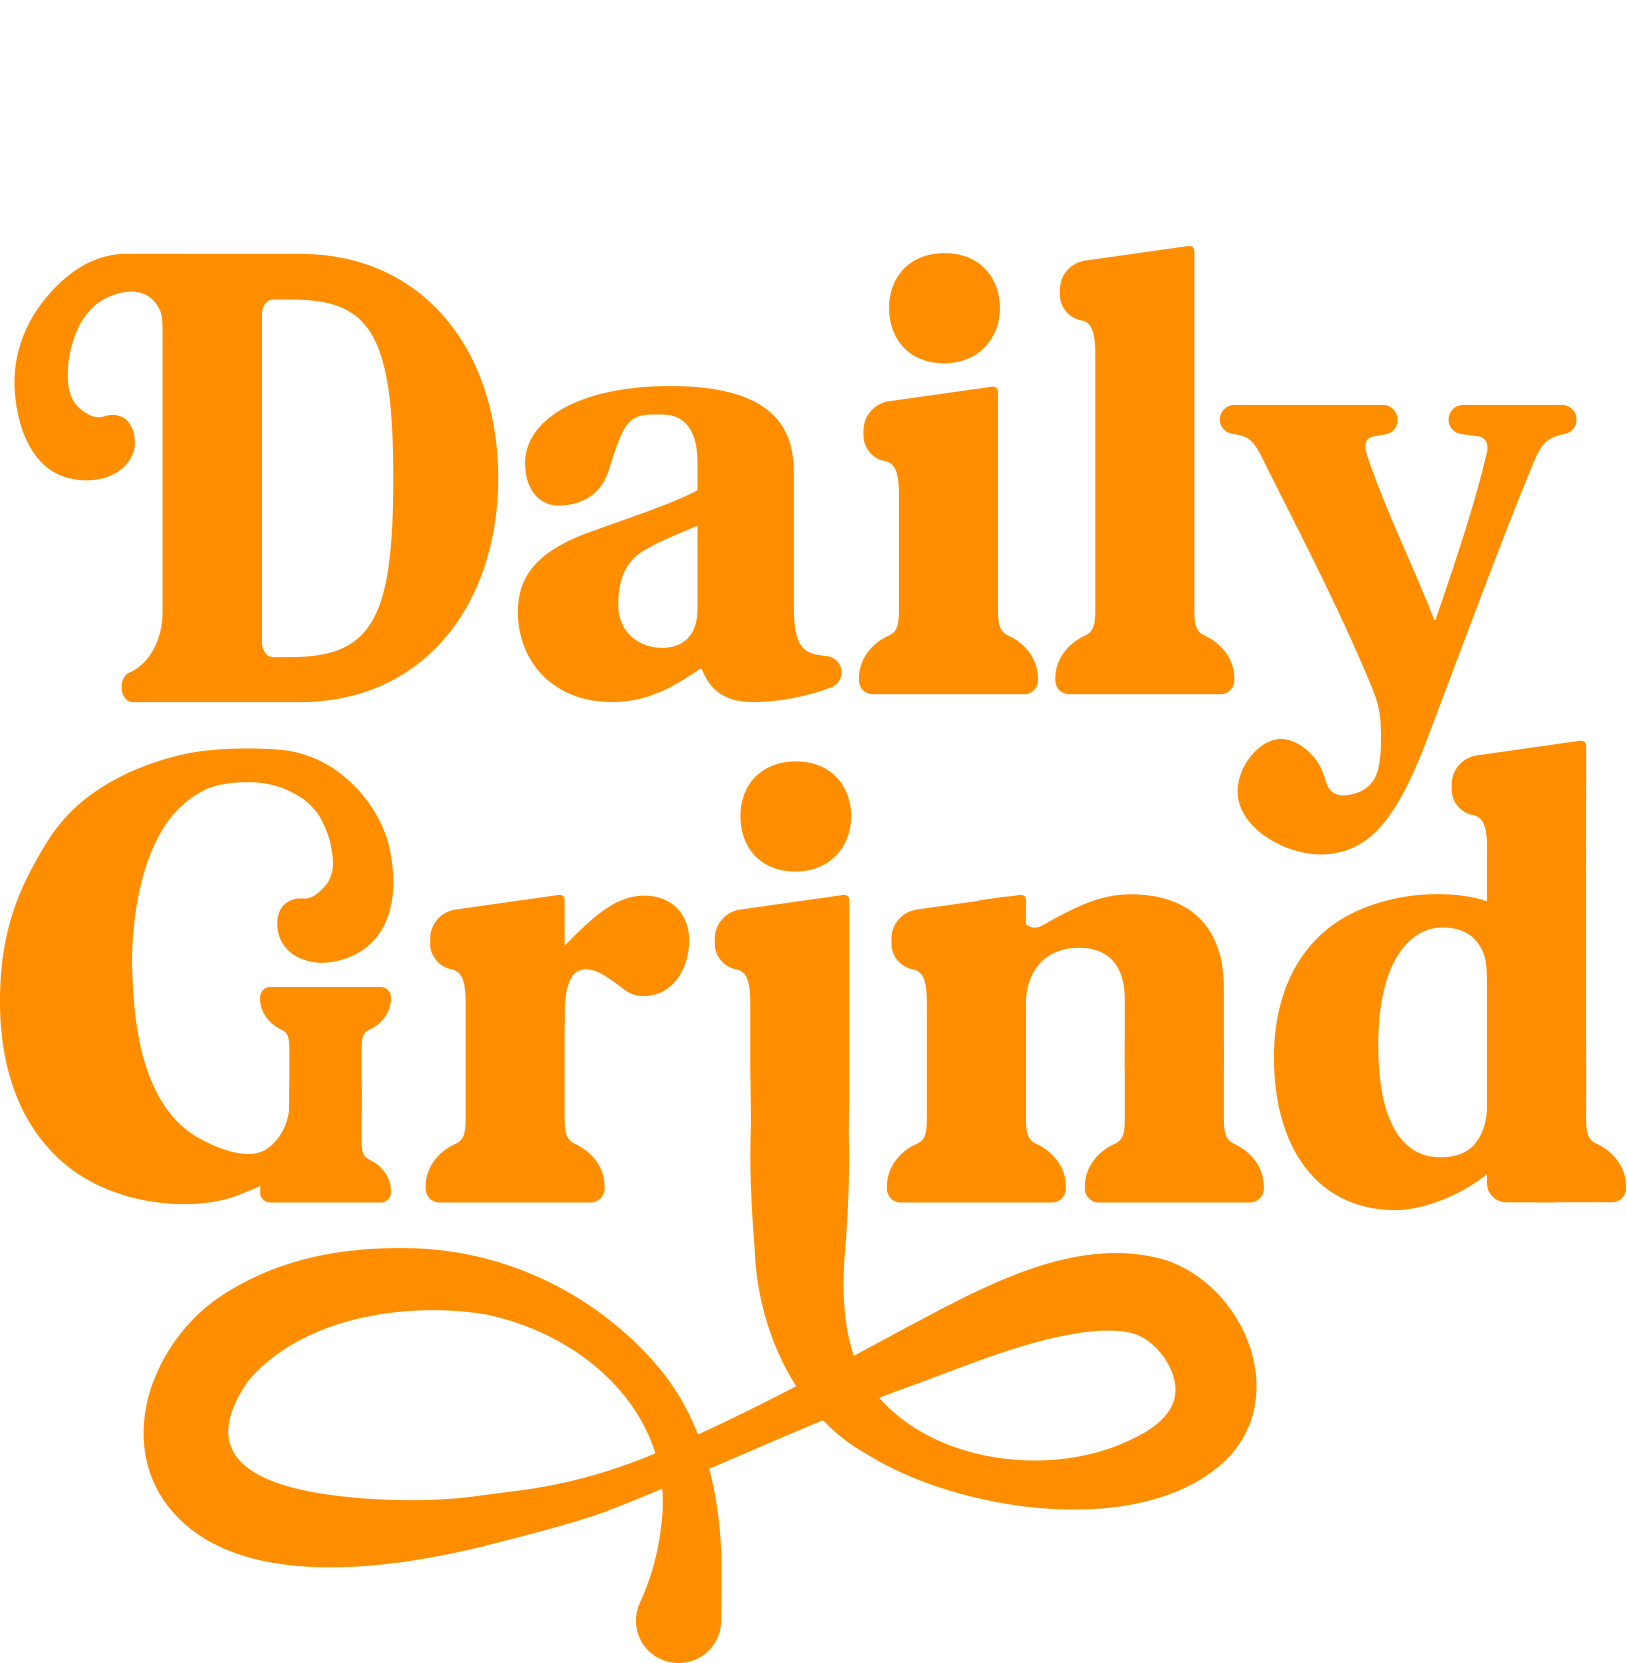 Shaun Keaveny's Daily Grind